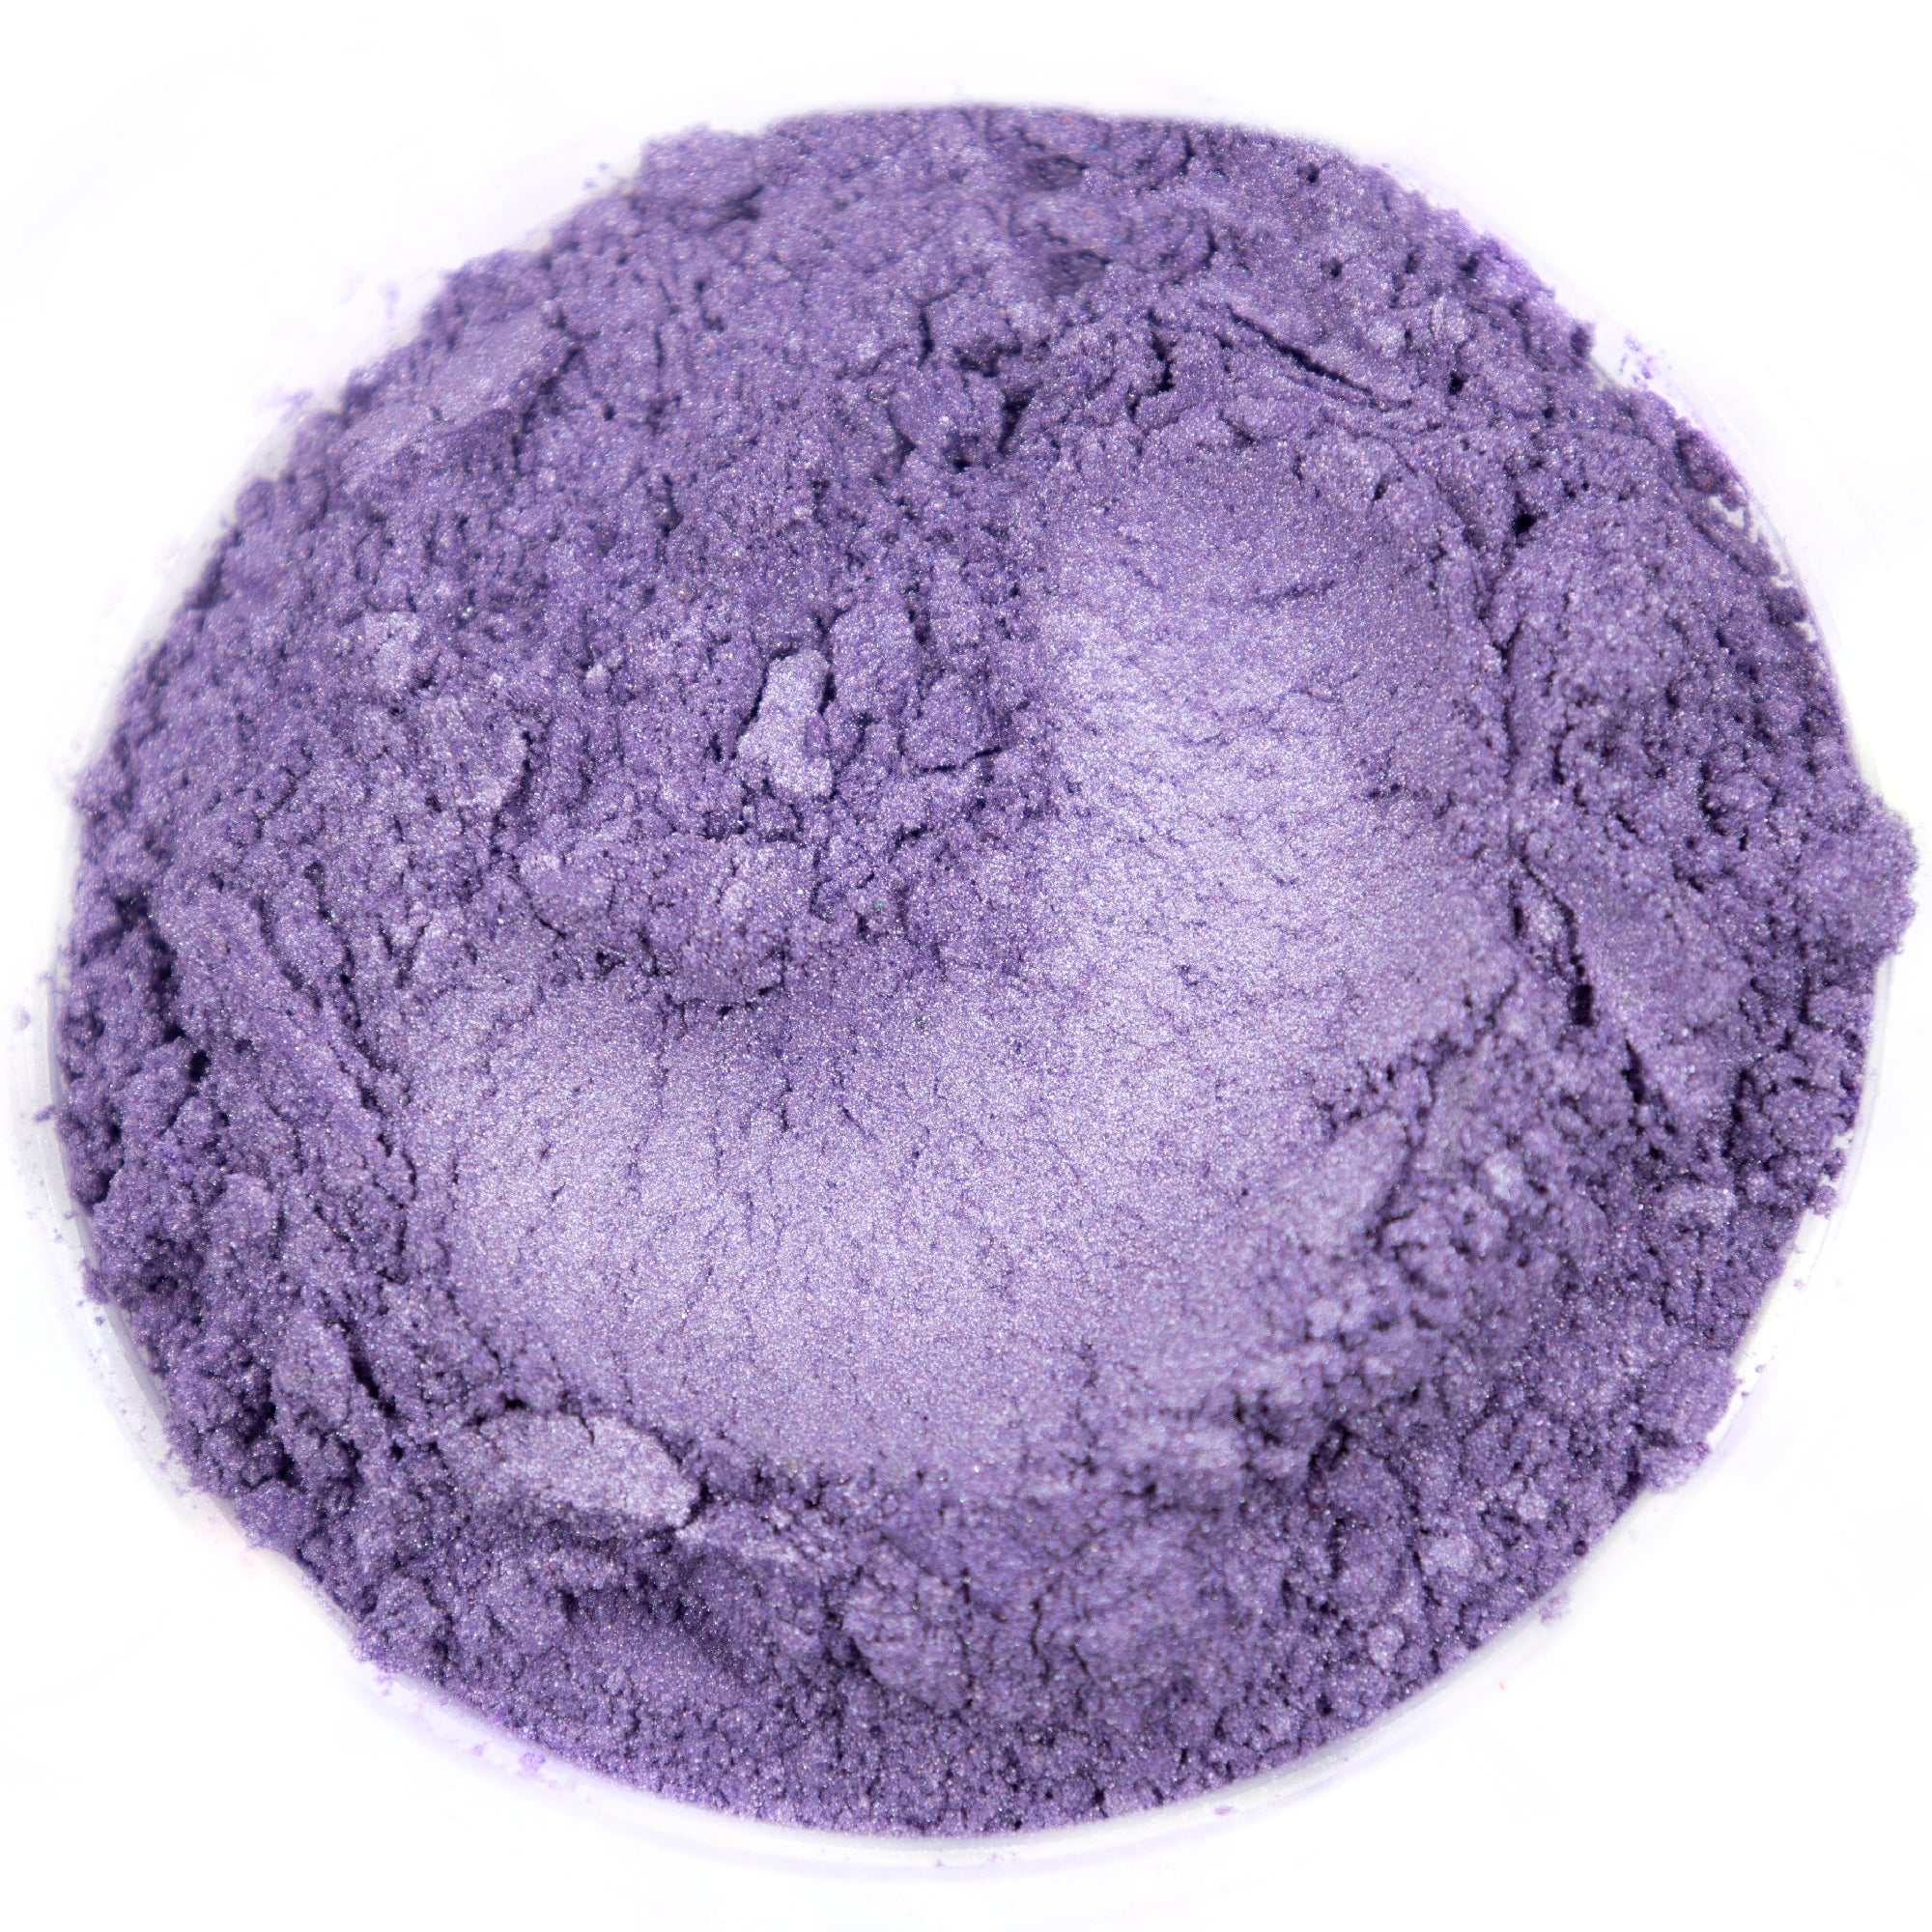 Mica Powder – Rolio Pigments